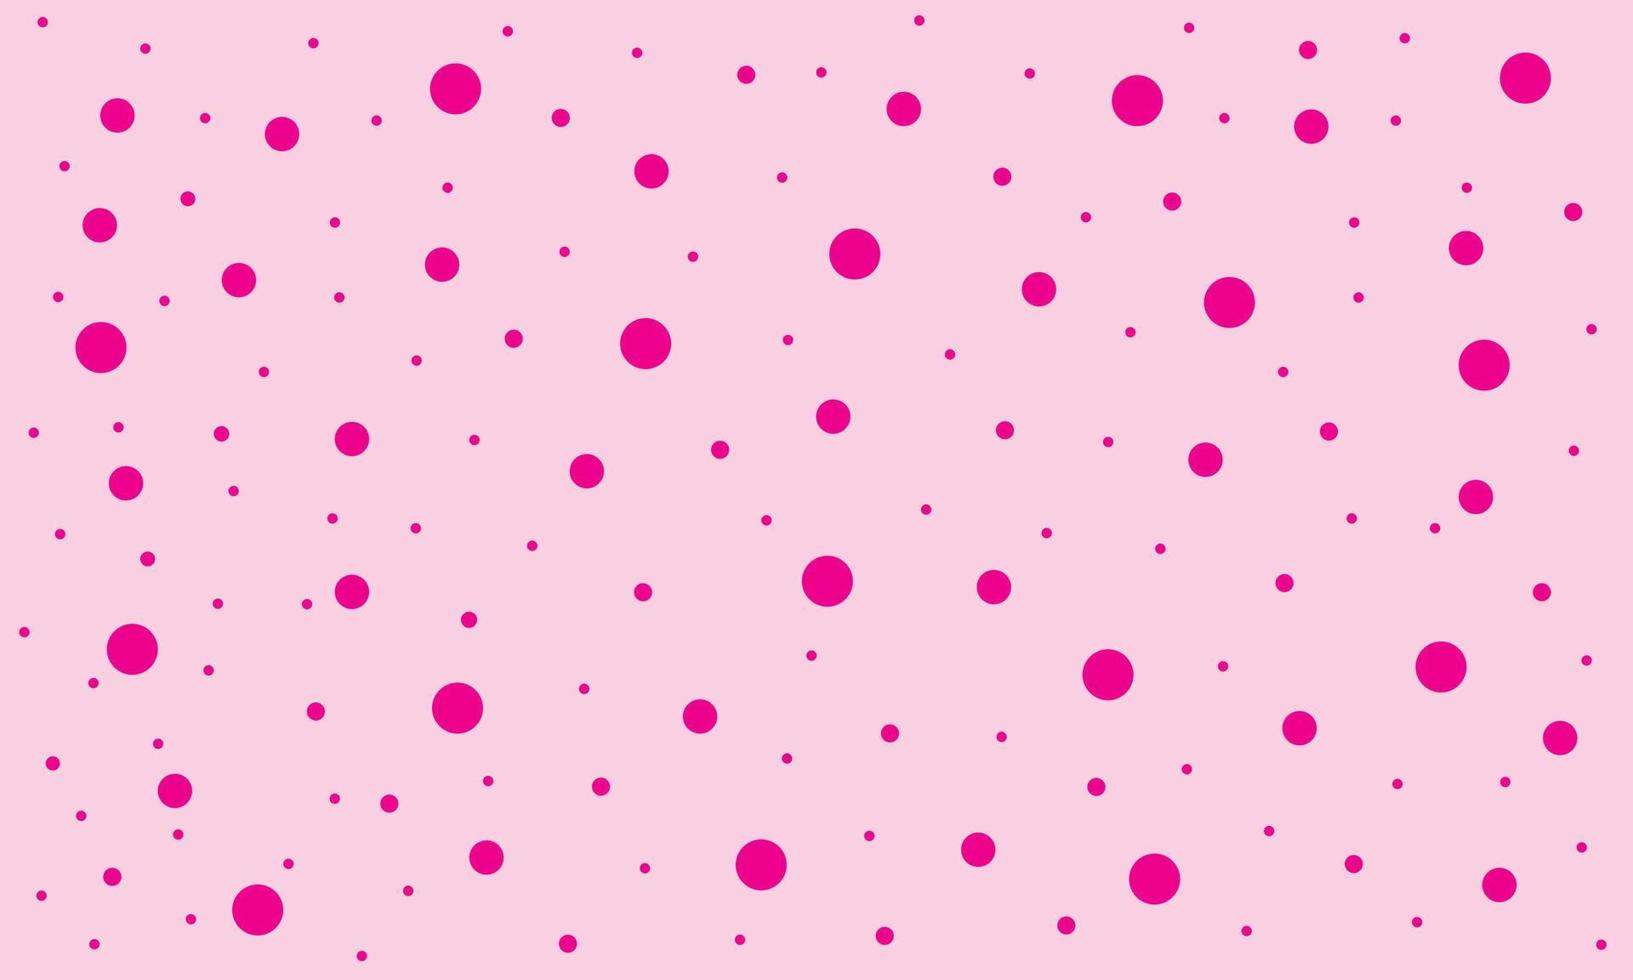 Flat Design Red Polka Dot Pattern Background vector